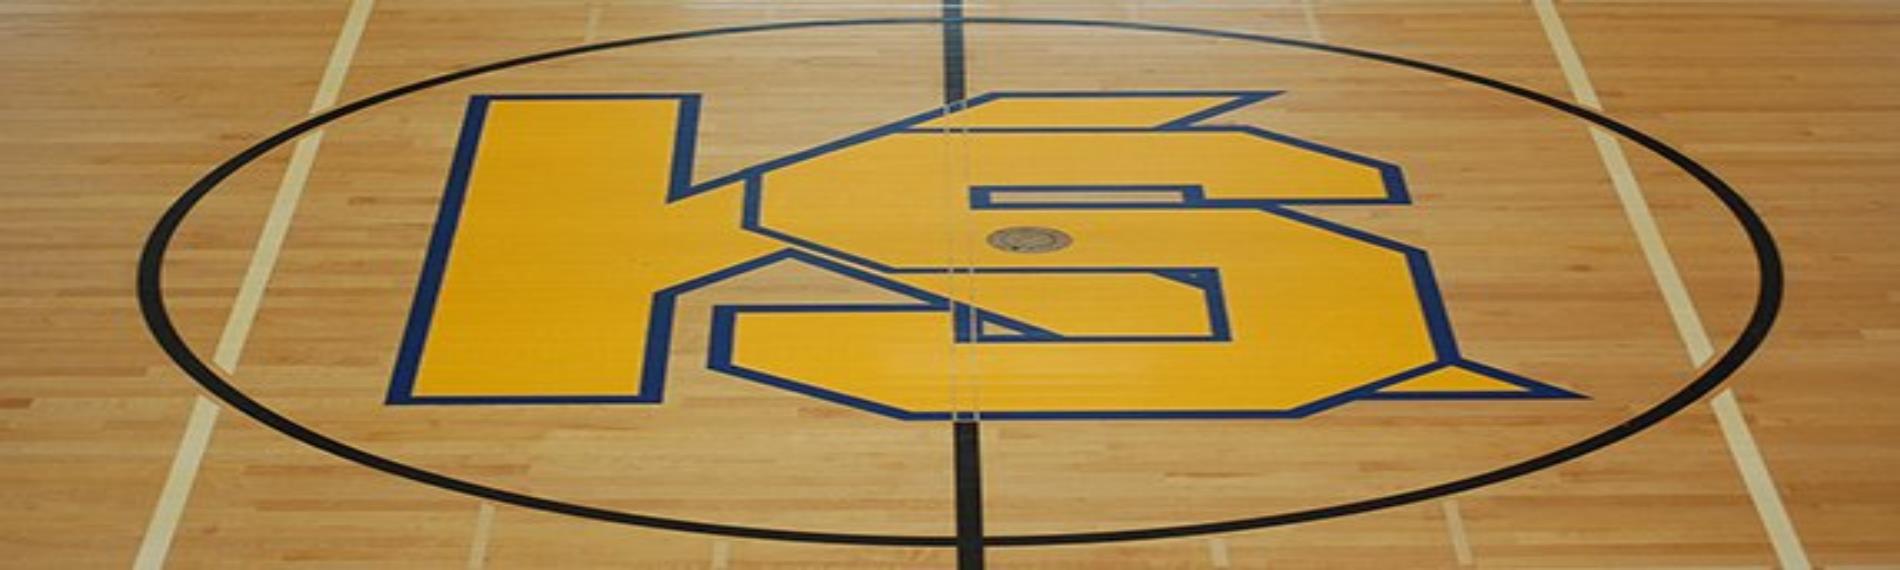 Knappa Basketball Court Logo